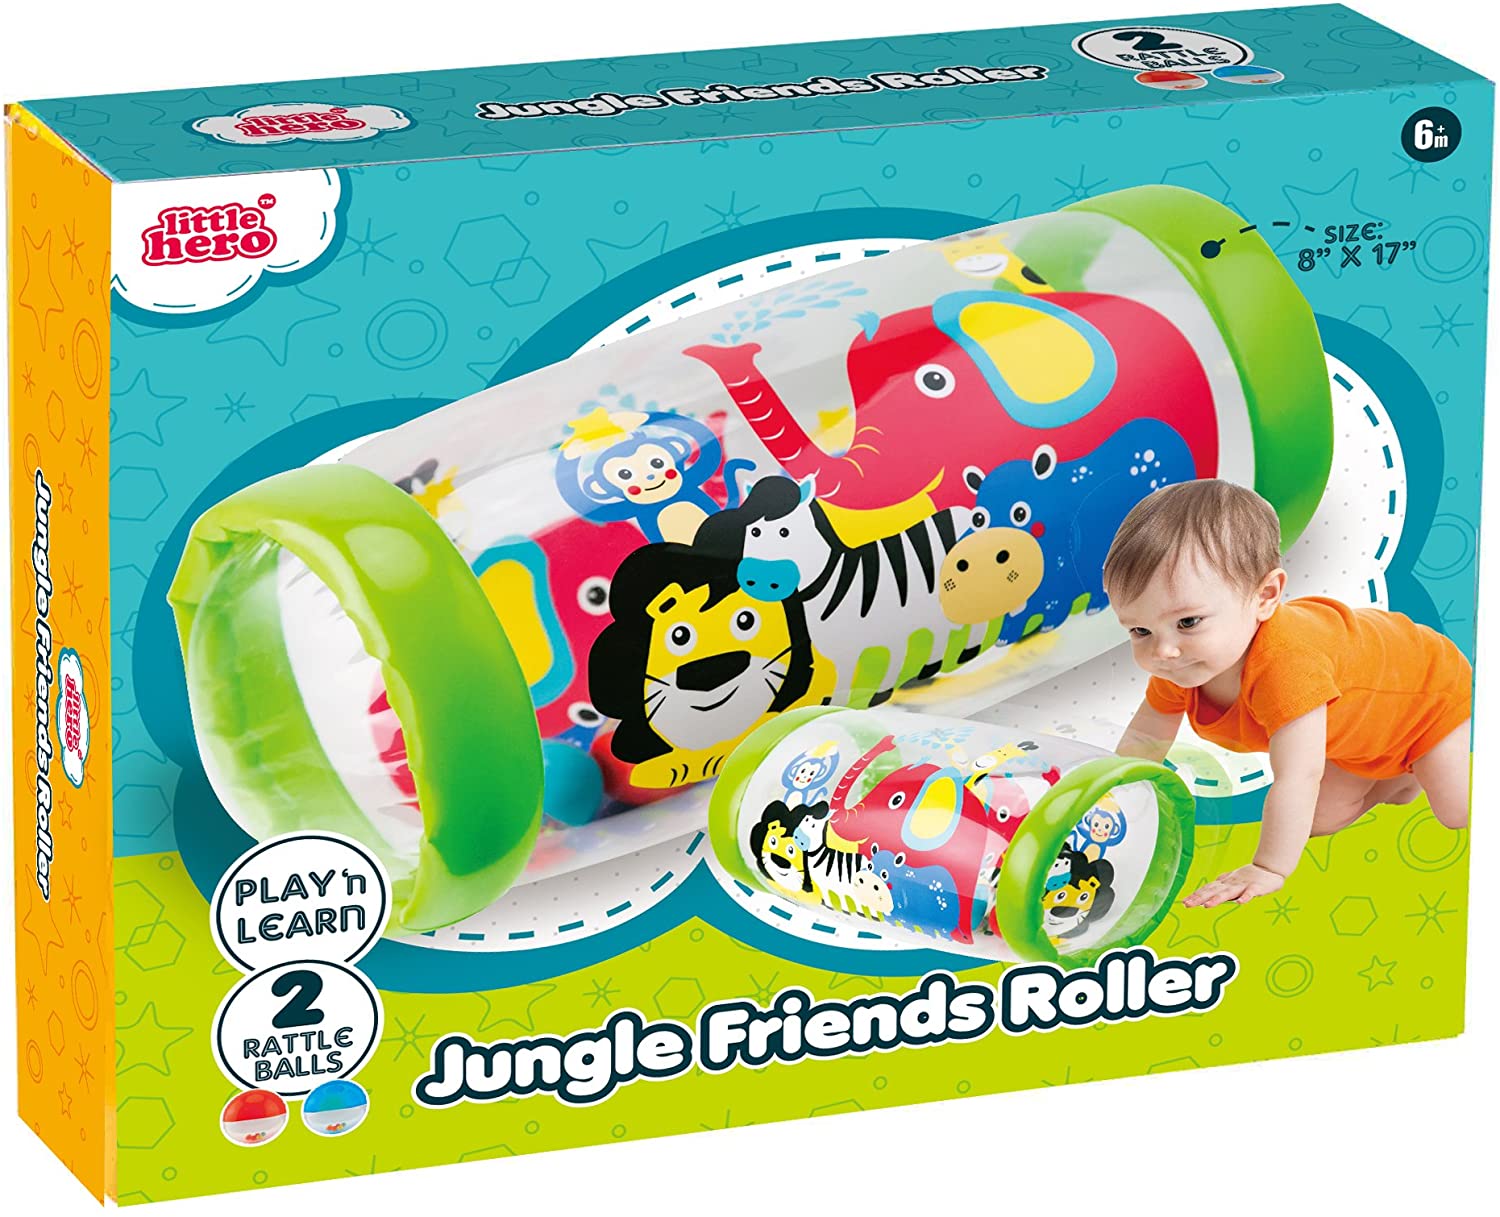 Jungle Friends Roller